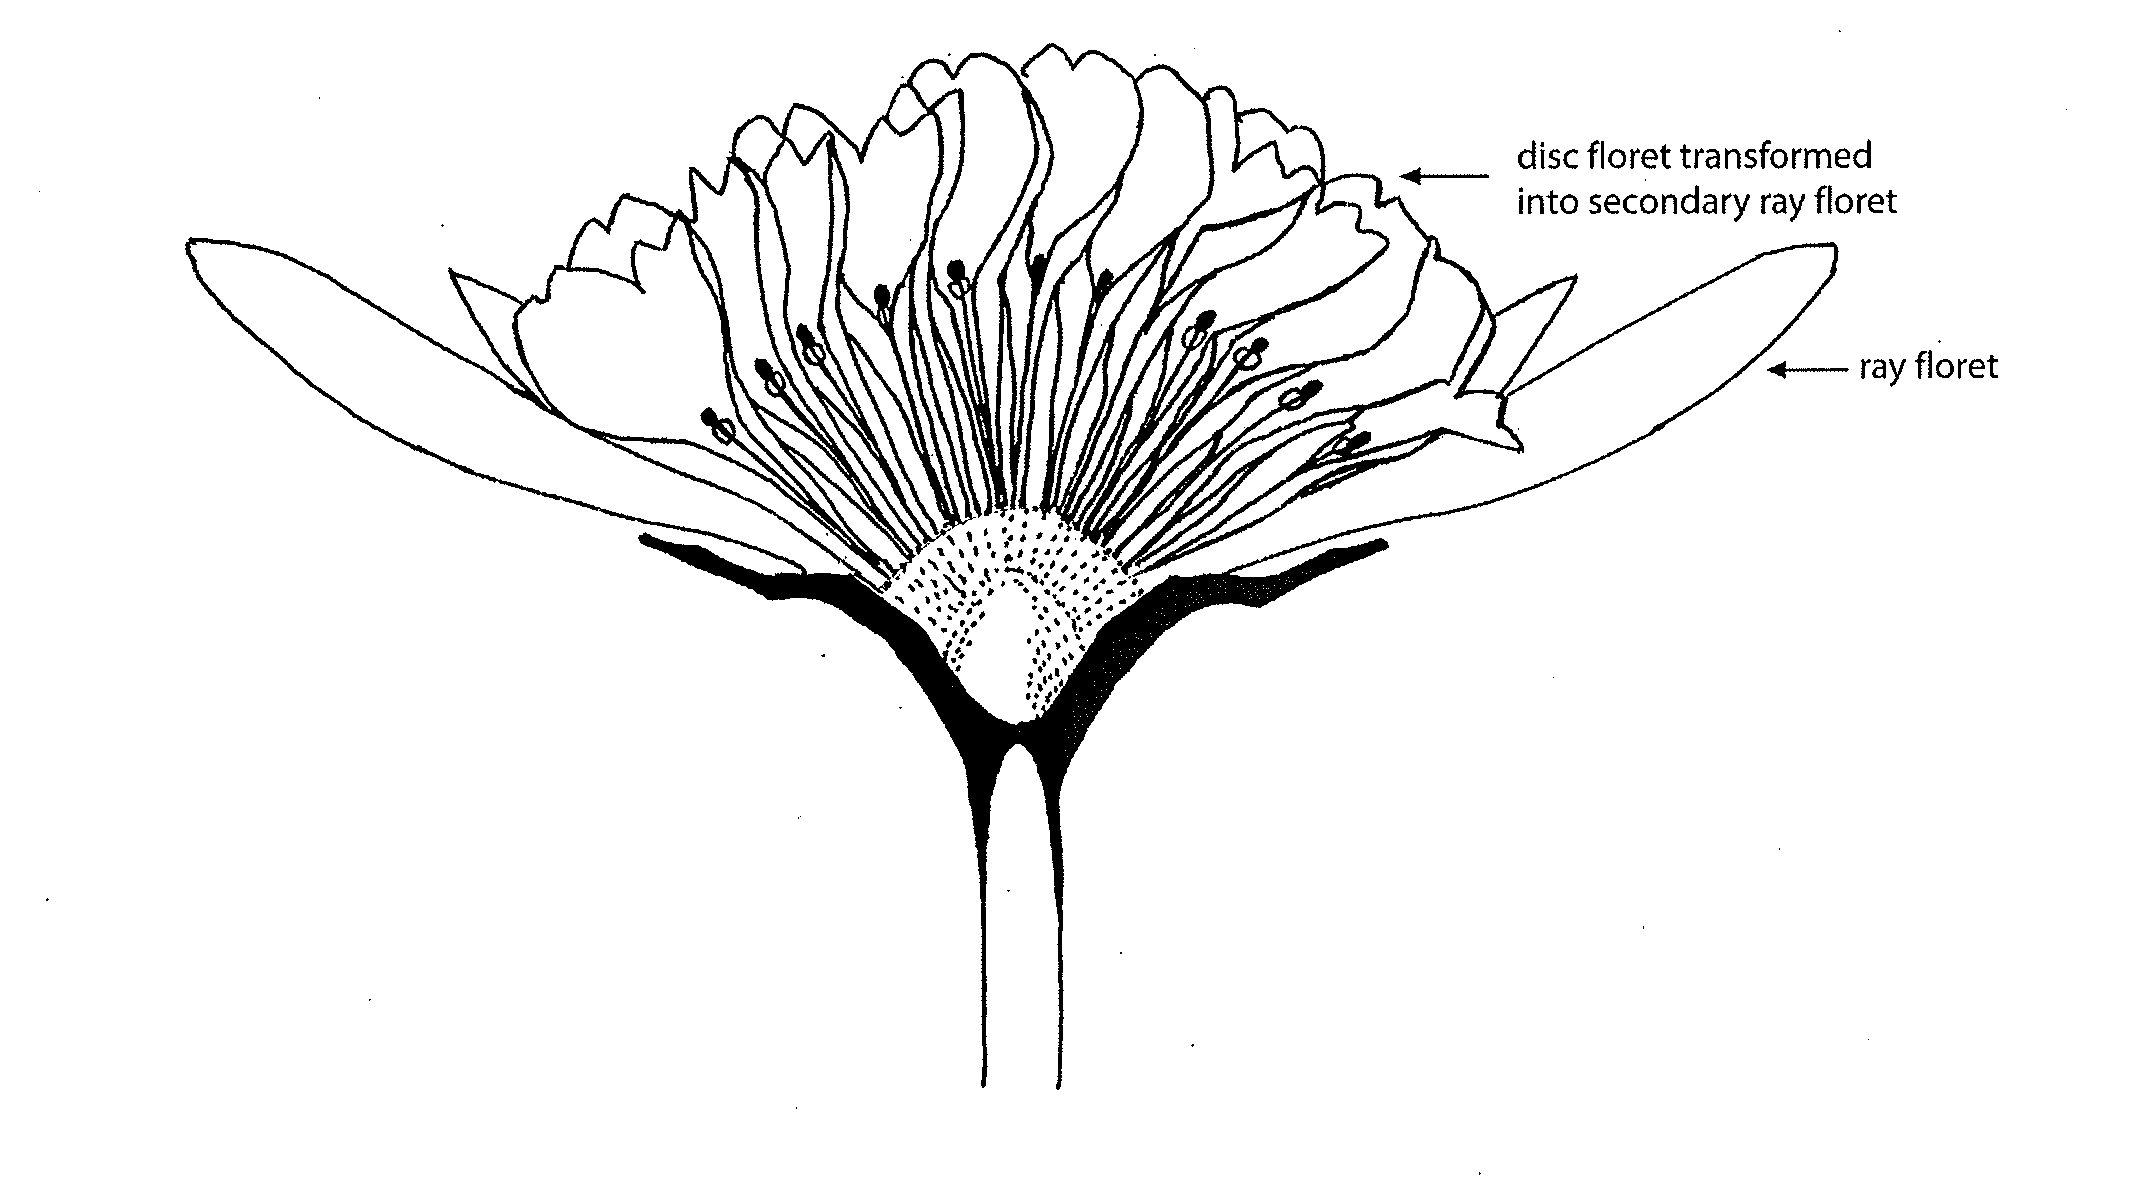 Osteospermum and dimorphoteca plants having an altered flower phenotype